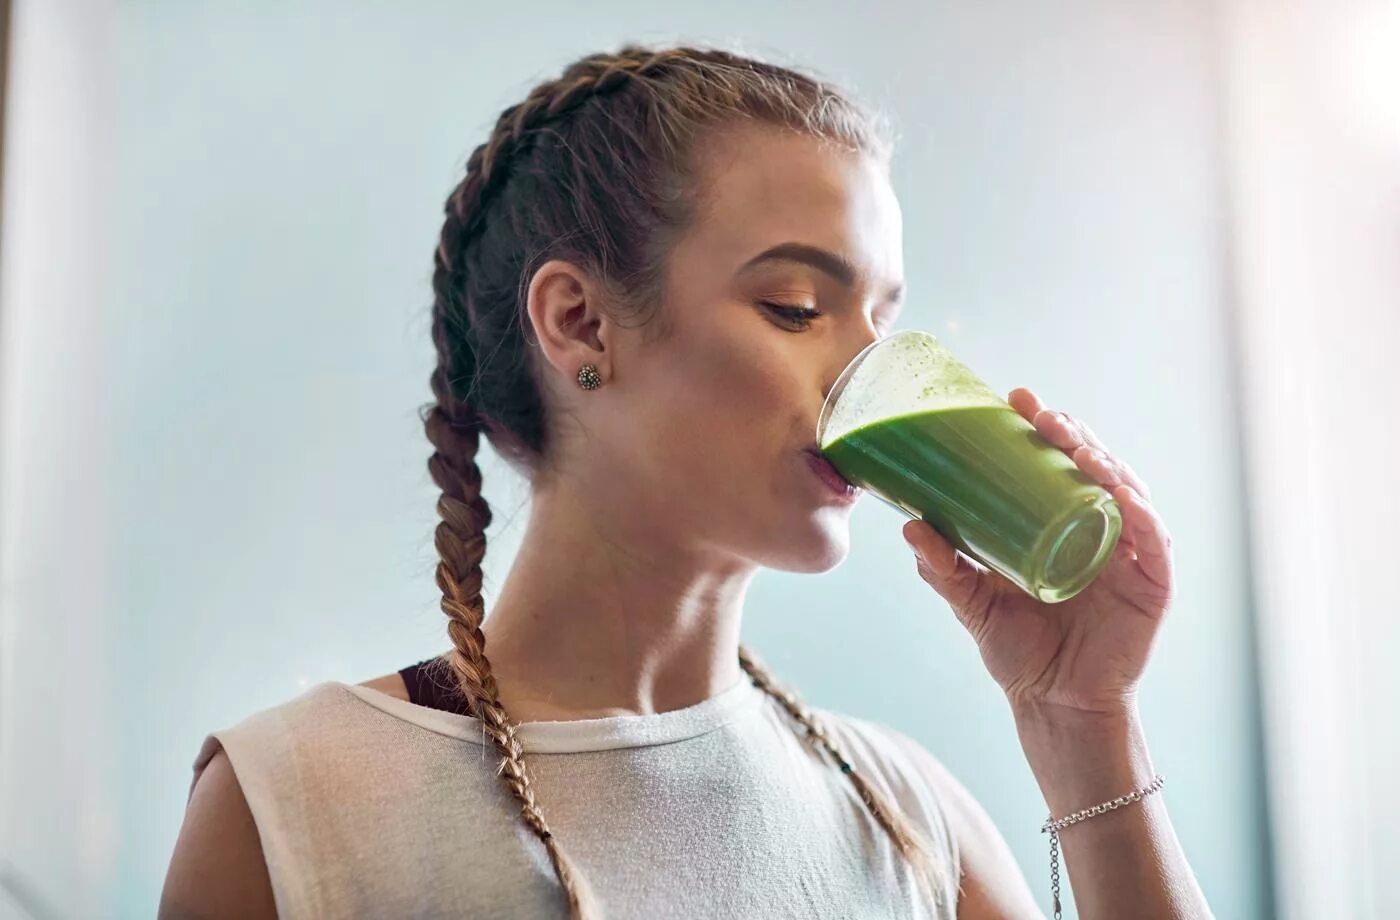 Пьет смузи. Девушка пьет смузи. Девушка пьет зеленый смузи. Пьет зеленый коктейль.